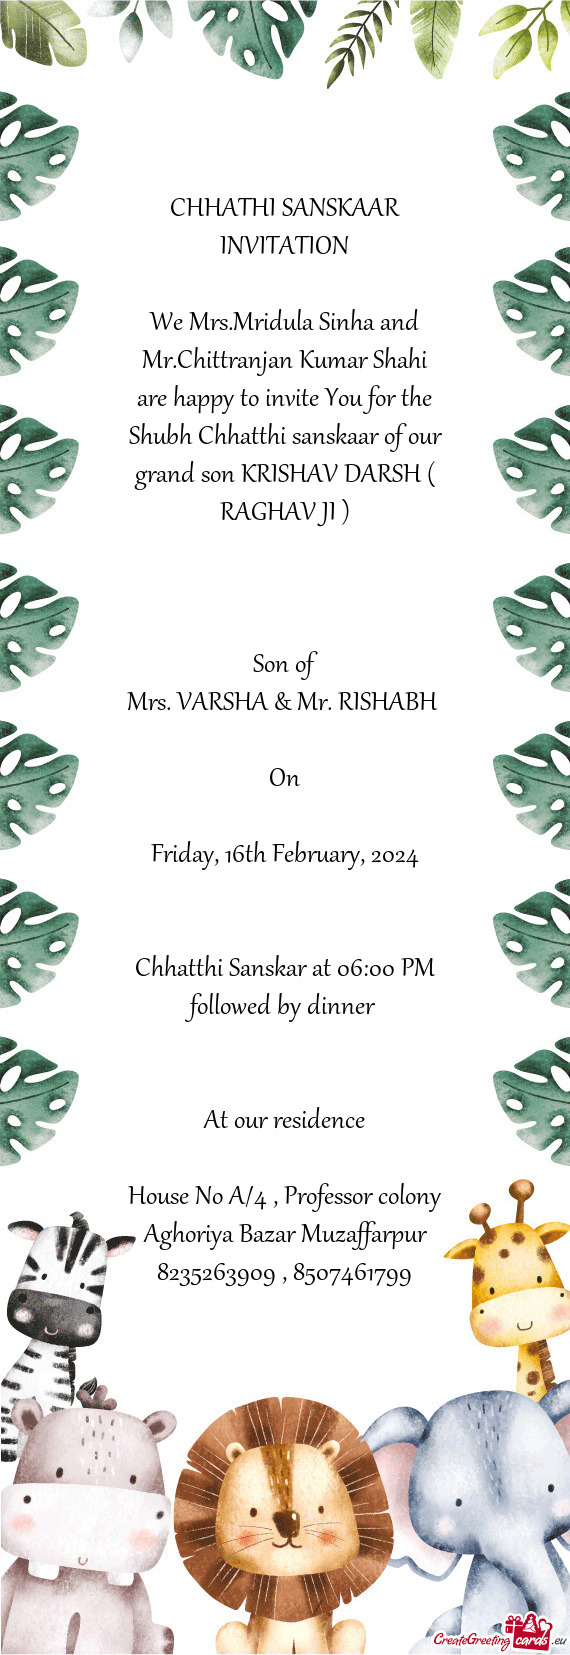 CHHATHI SANSKAAR INVITATION